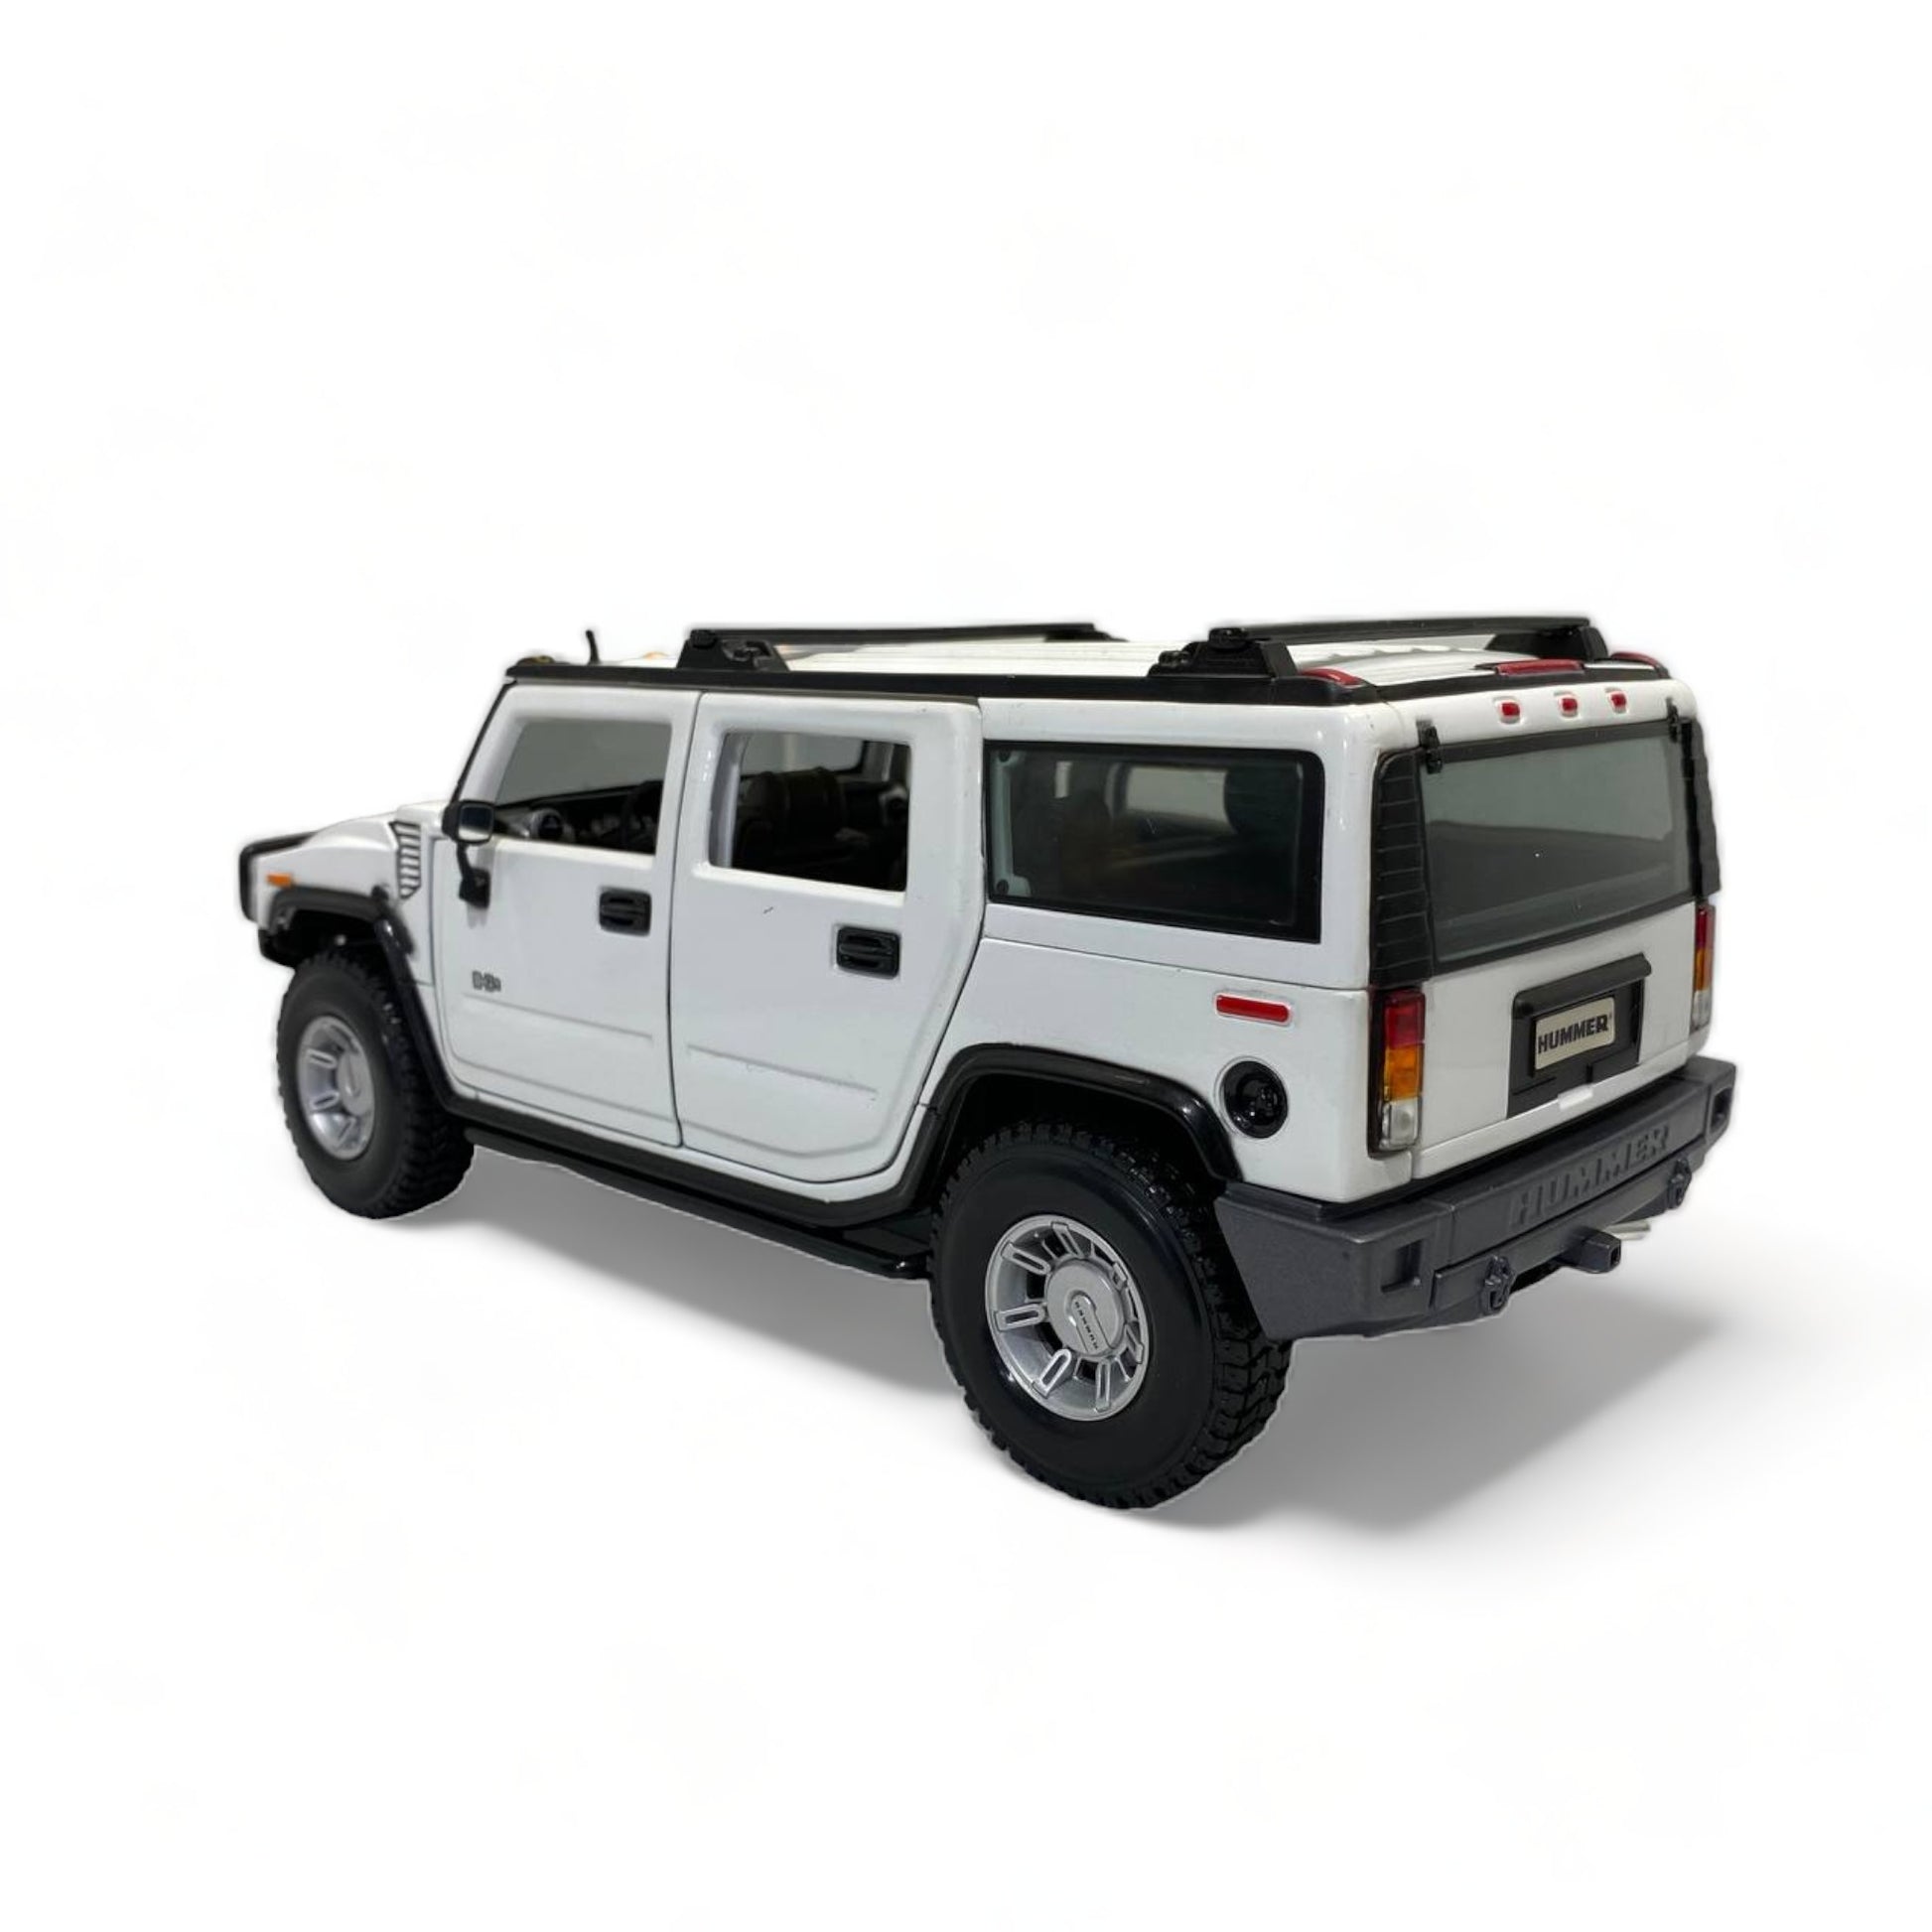 Maisto HUMMER H2 SUV - White (1/18 Diecast Metal, All Opening)|Sold in Dturman.com Dubai UAE.